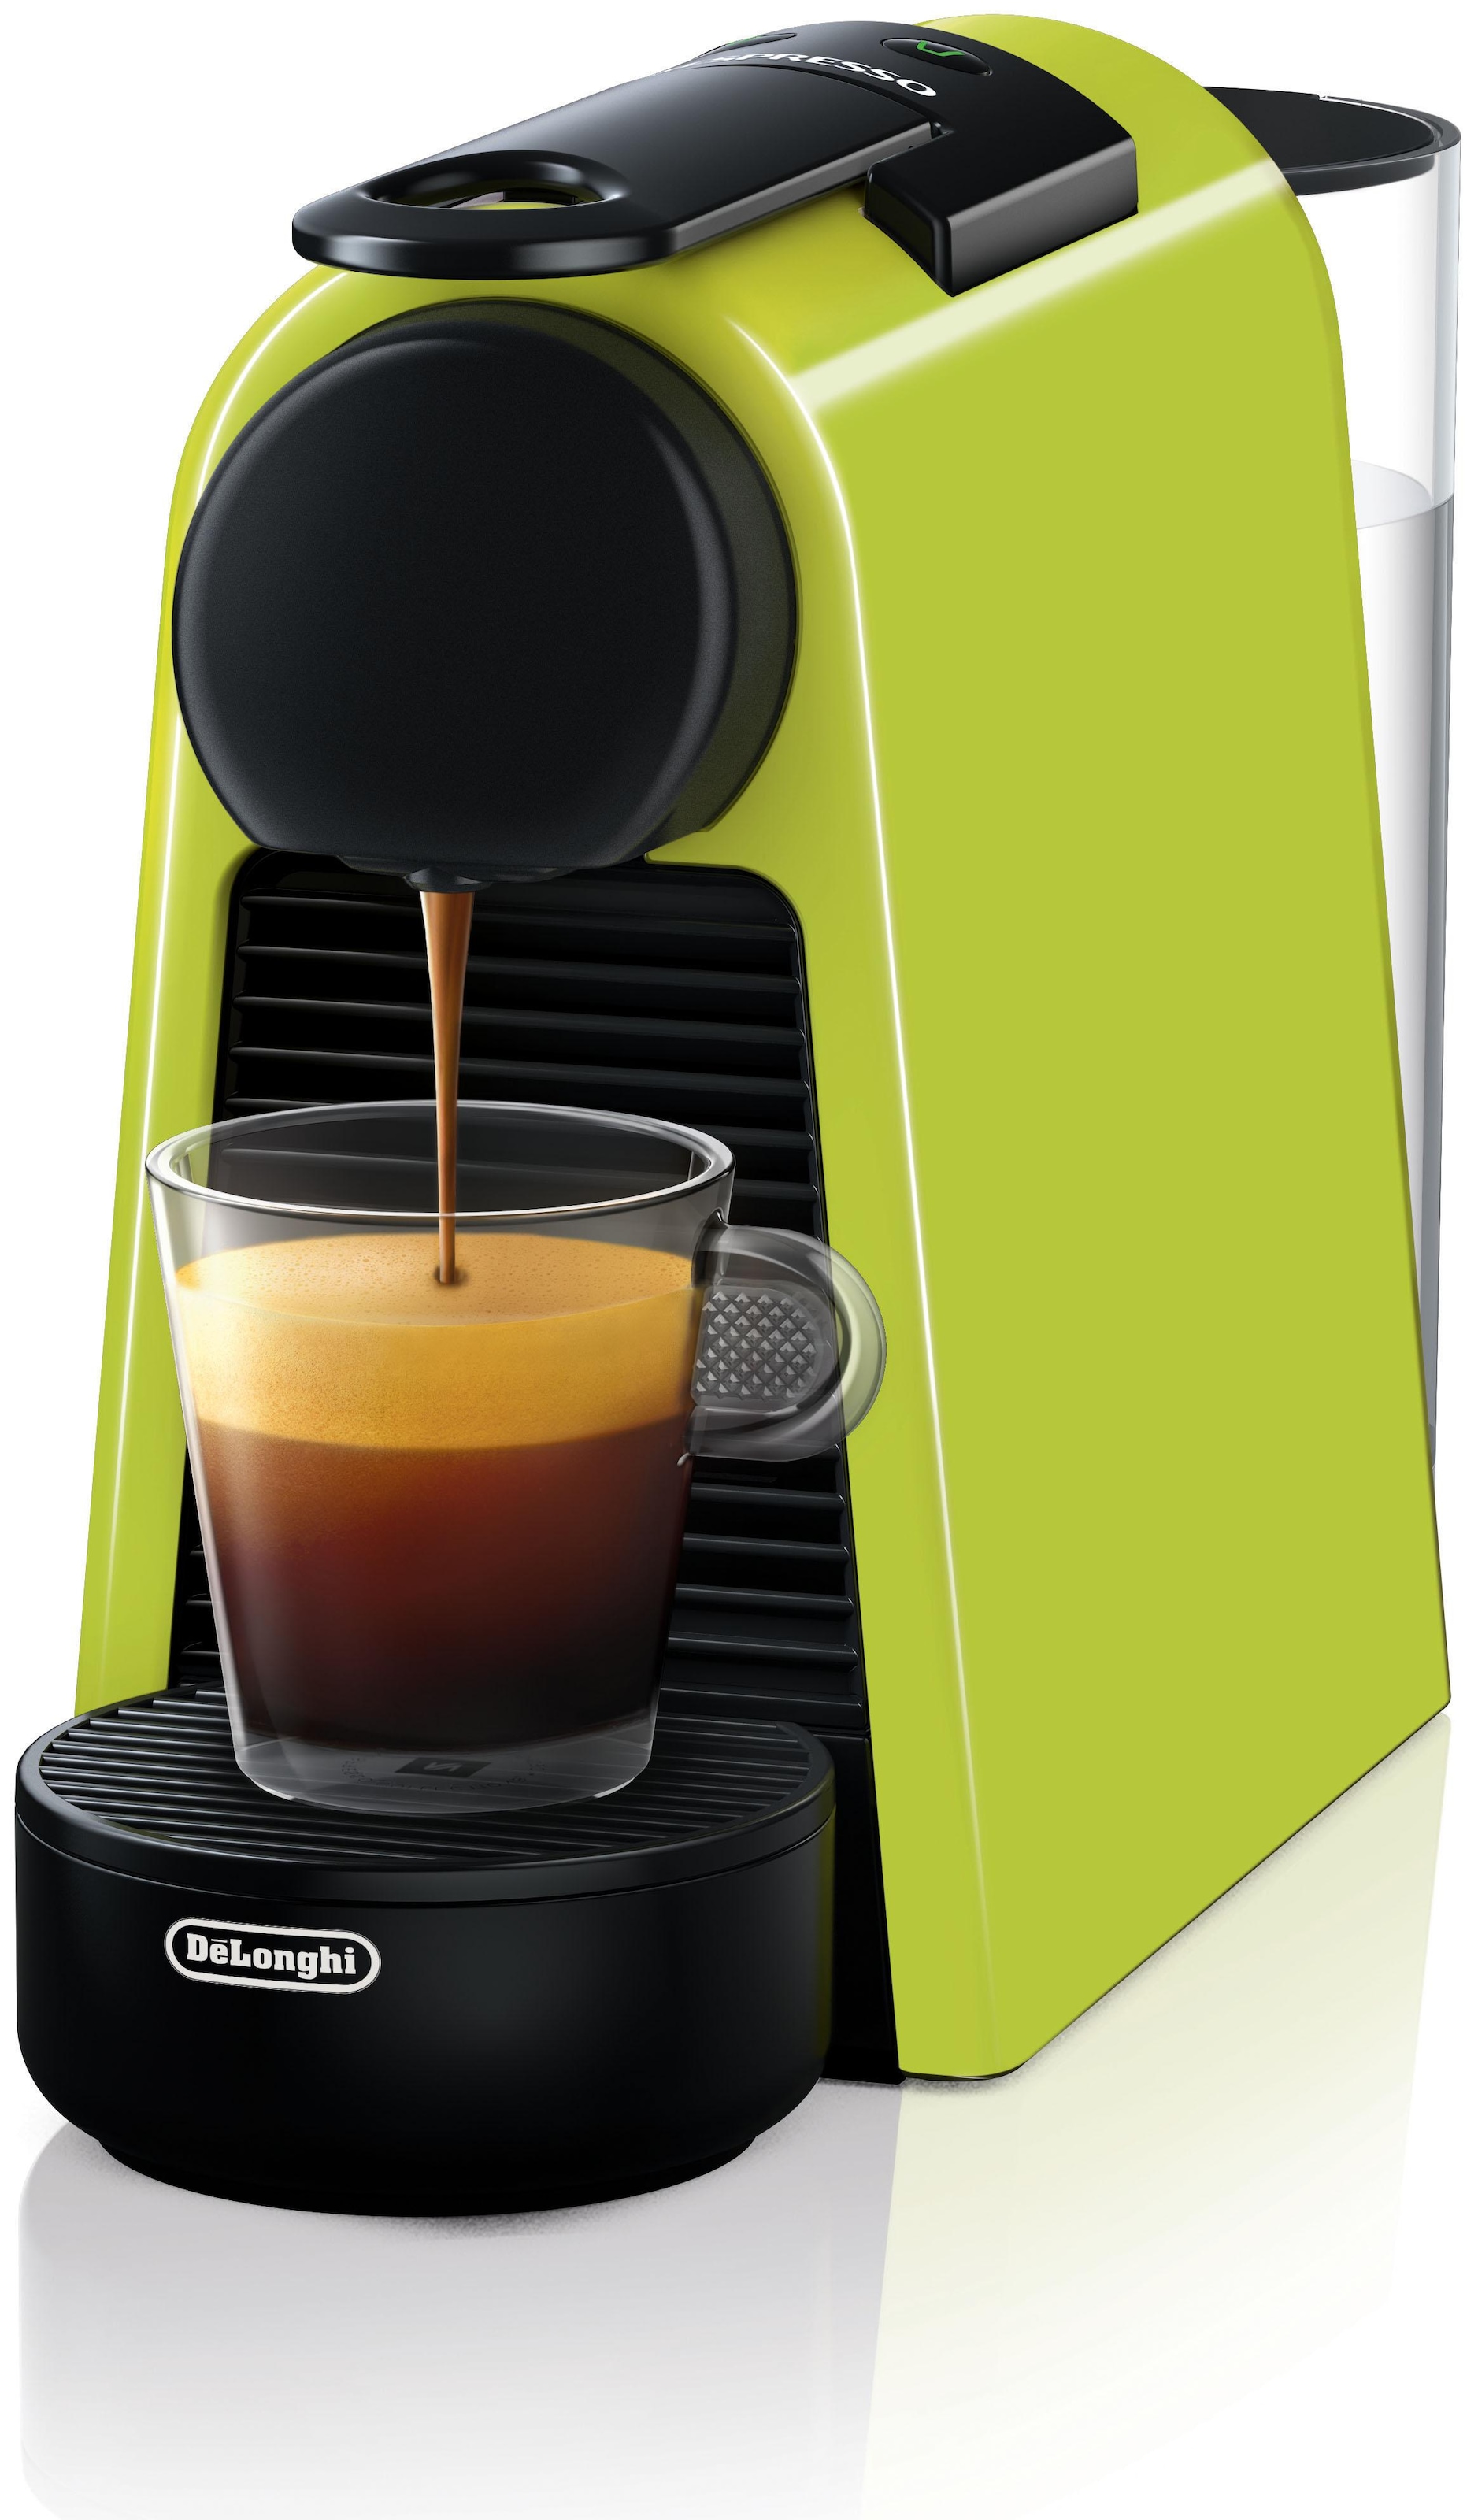 Nespresso Kapselmaschine »Essenza Mini EN85.L von DeLonghi, Lime Green«, inkl. Willkommenspaket mit 7 Kapseln